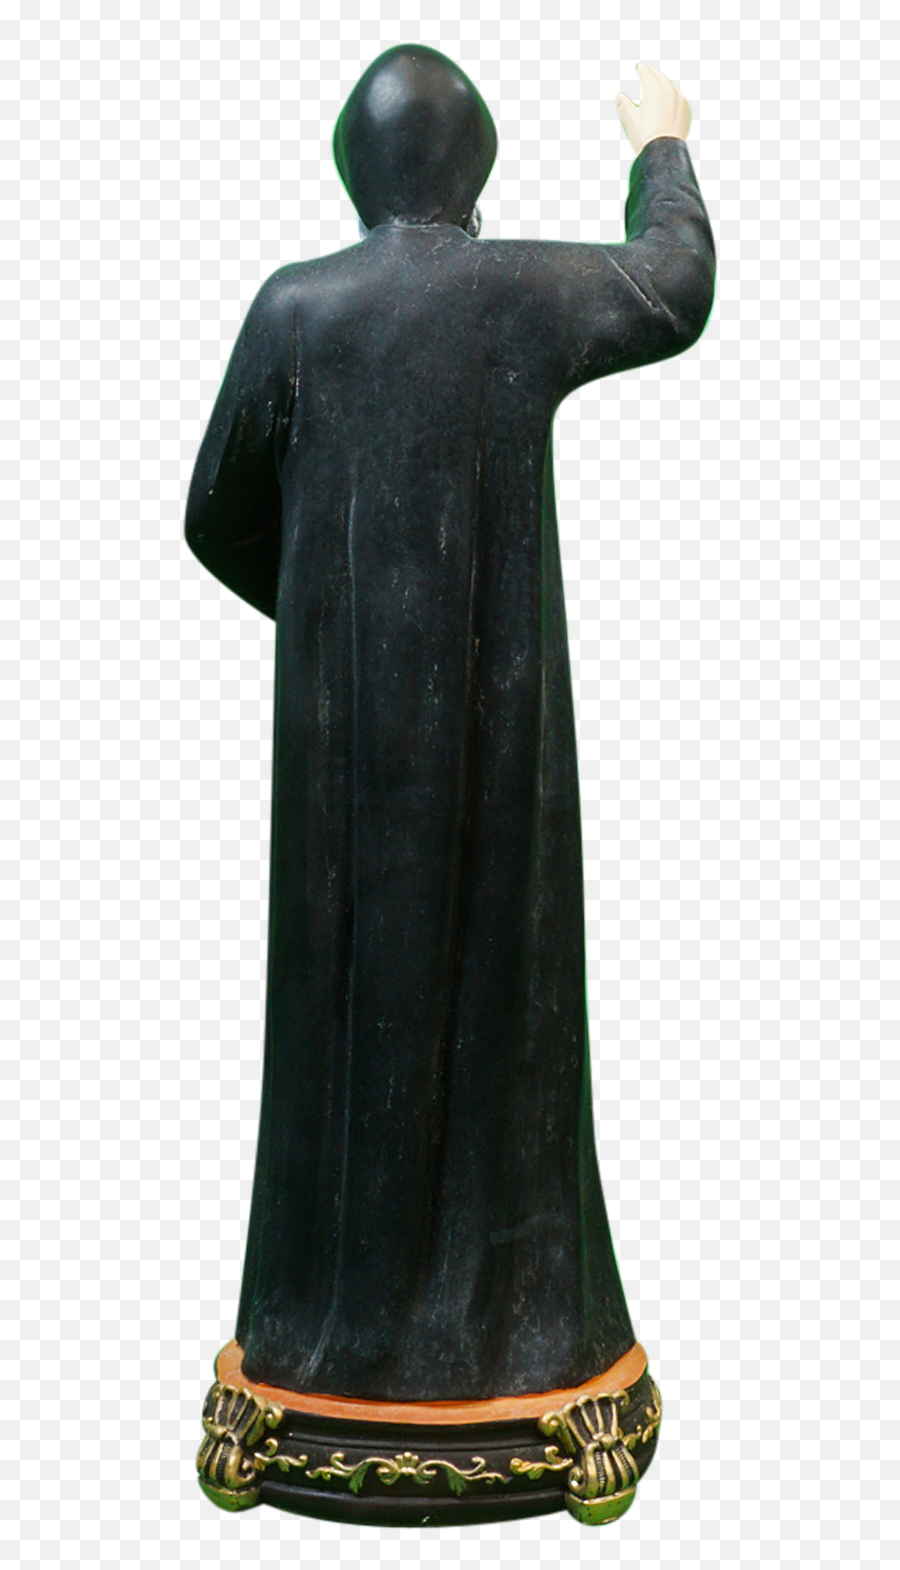 Saint Charbel Statue The Monk Of Lebanon - Classical Sculpture Emoji,Emotion Monk Statue